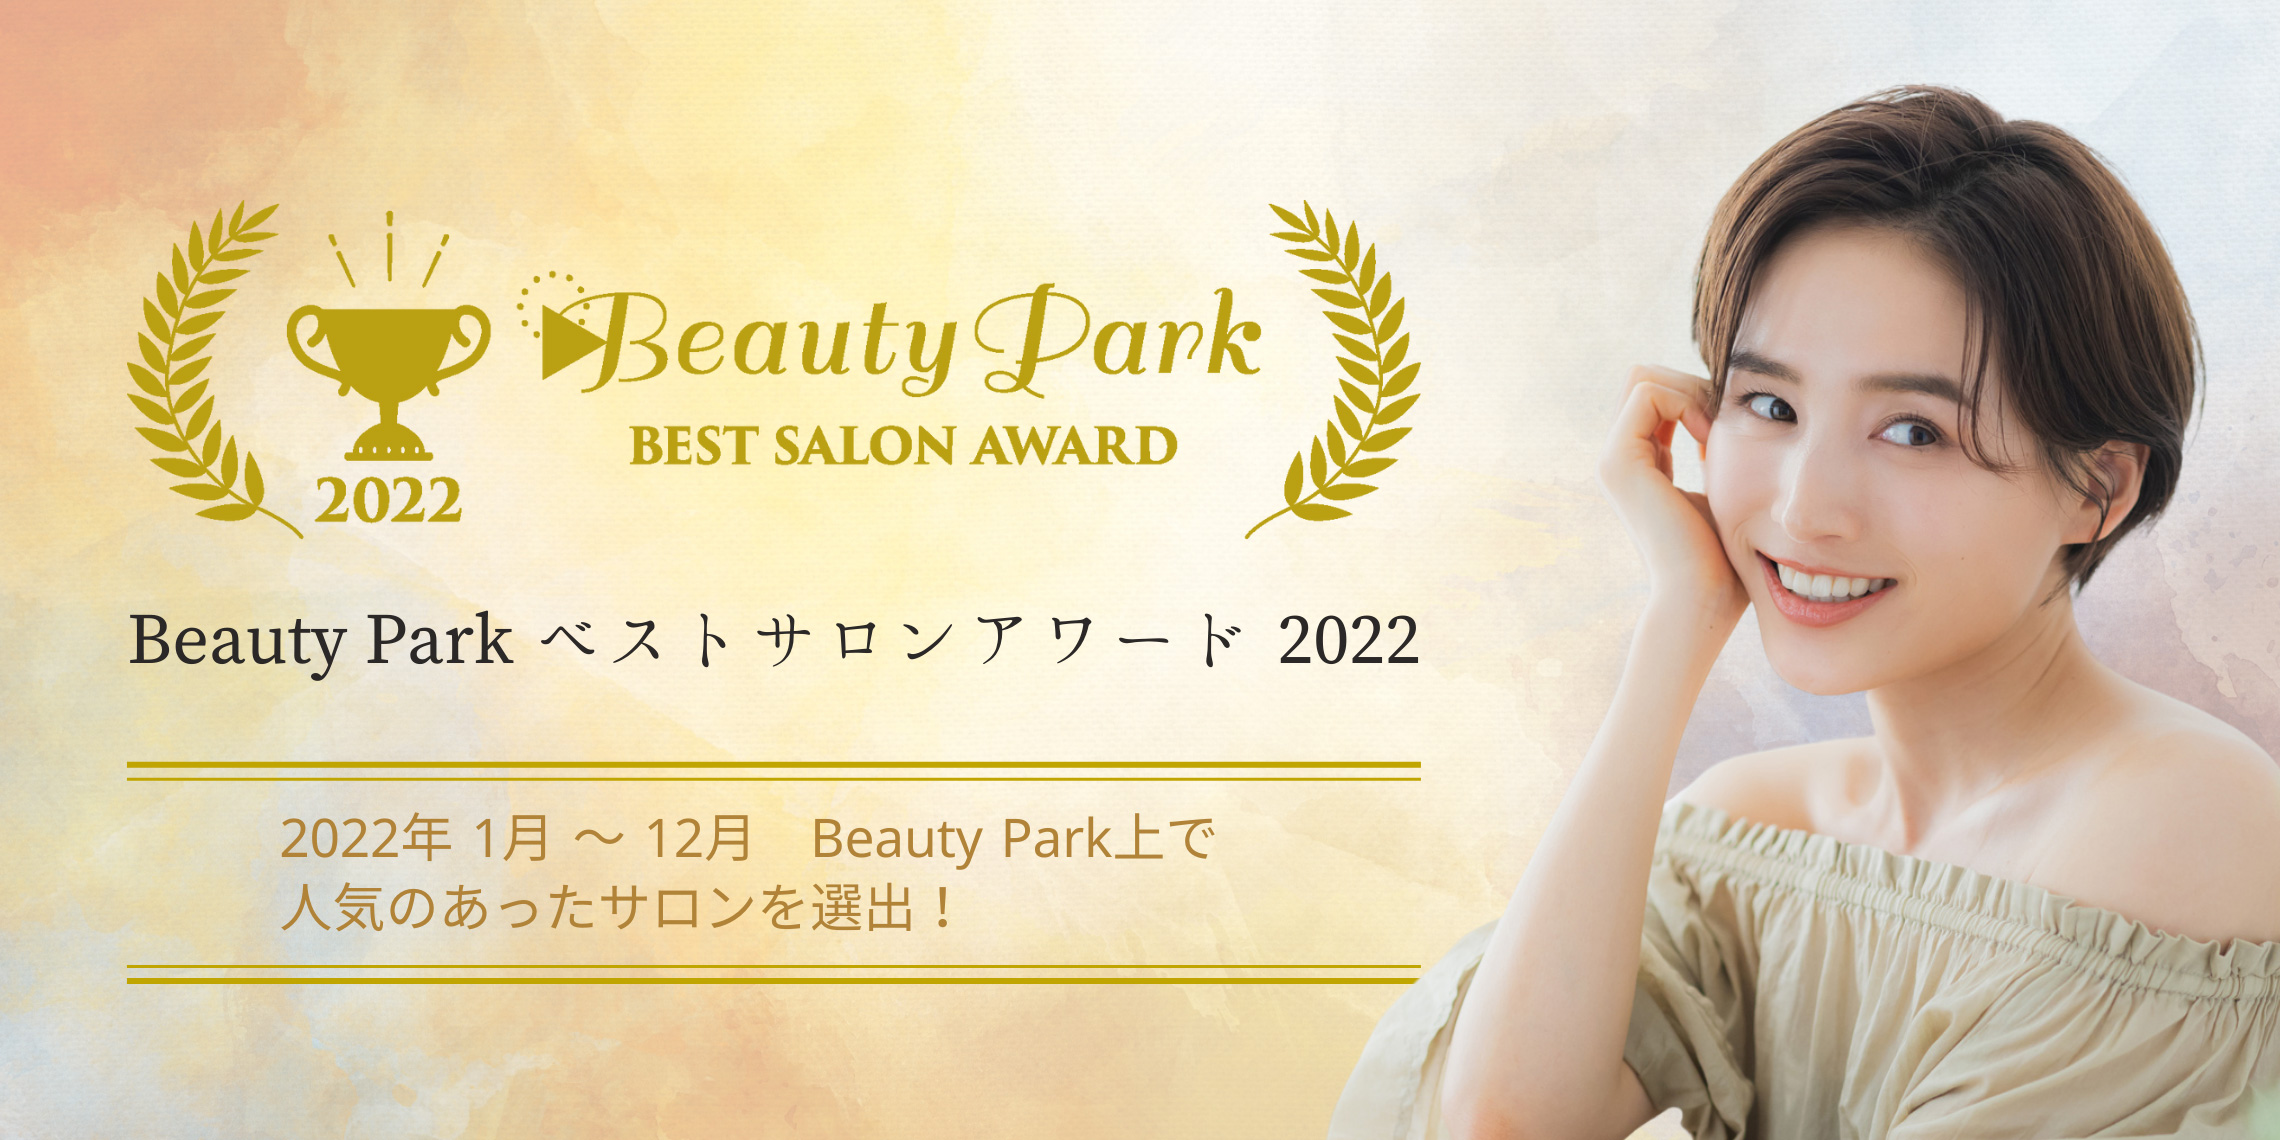 Beauty Park ベストサロンアワード 2022（Beauty Park BEST SALON AWARD）2020年1月～12月 beauty Park上で人気のあったサロン・カタログを選出！